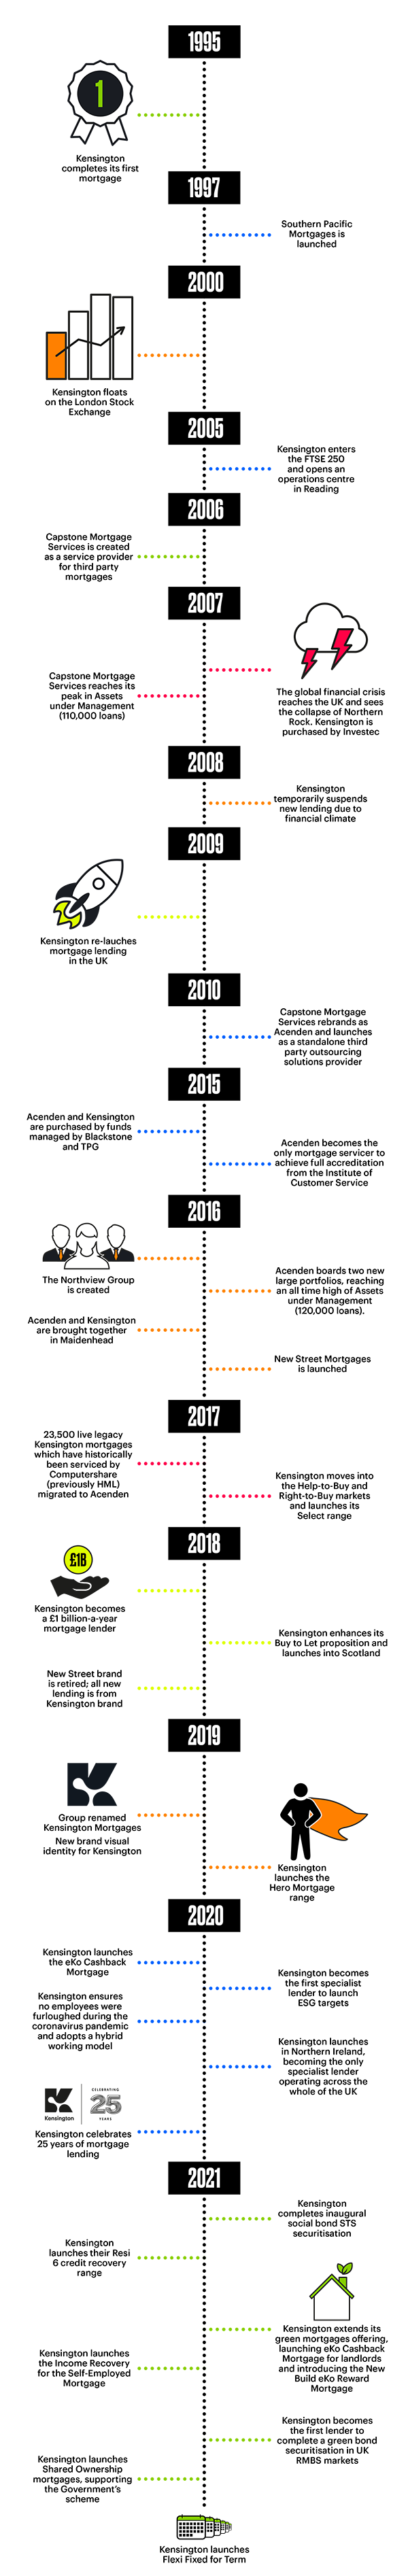 Company history timeline